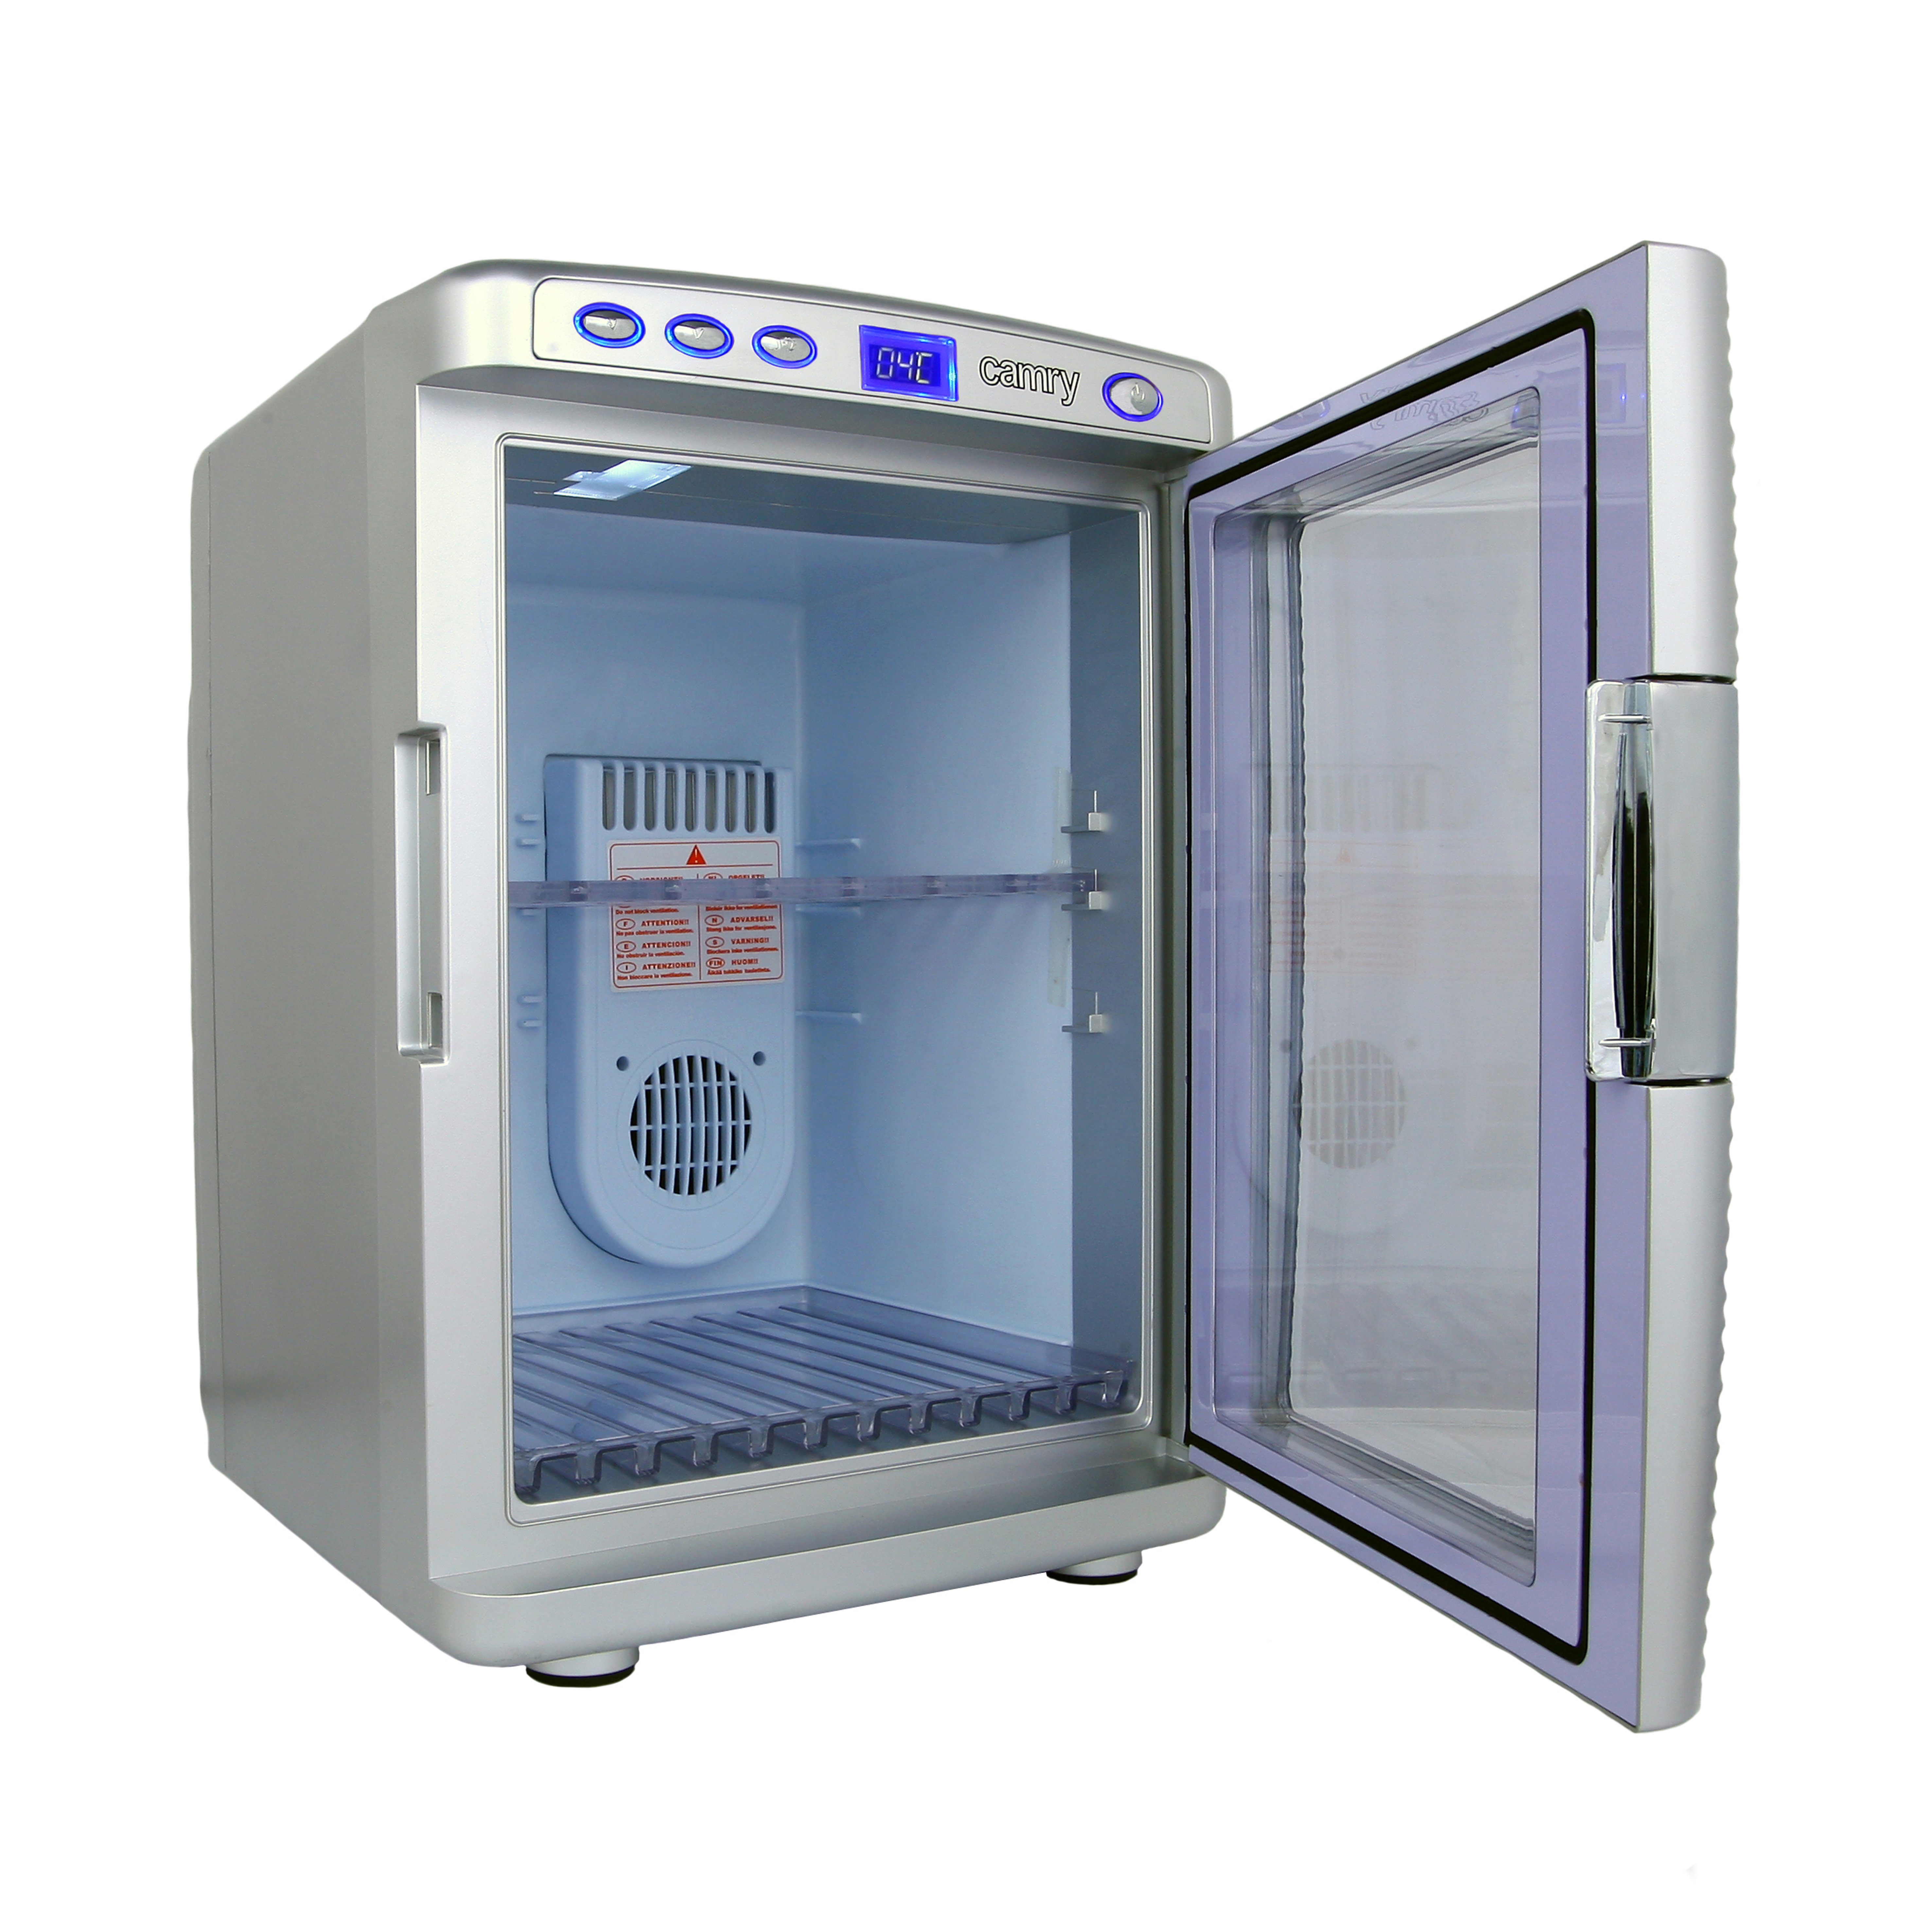 45.3 Kühlschrank cm JUNG klein Minikühlschrank 37.1 breit, leise, hoch, CR8062, 20L, Getränkekühlschrank Mini cm Kühlschrank